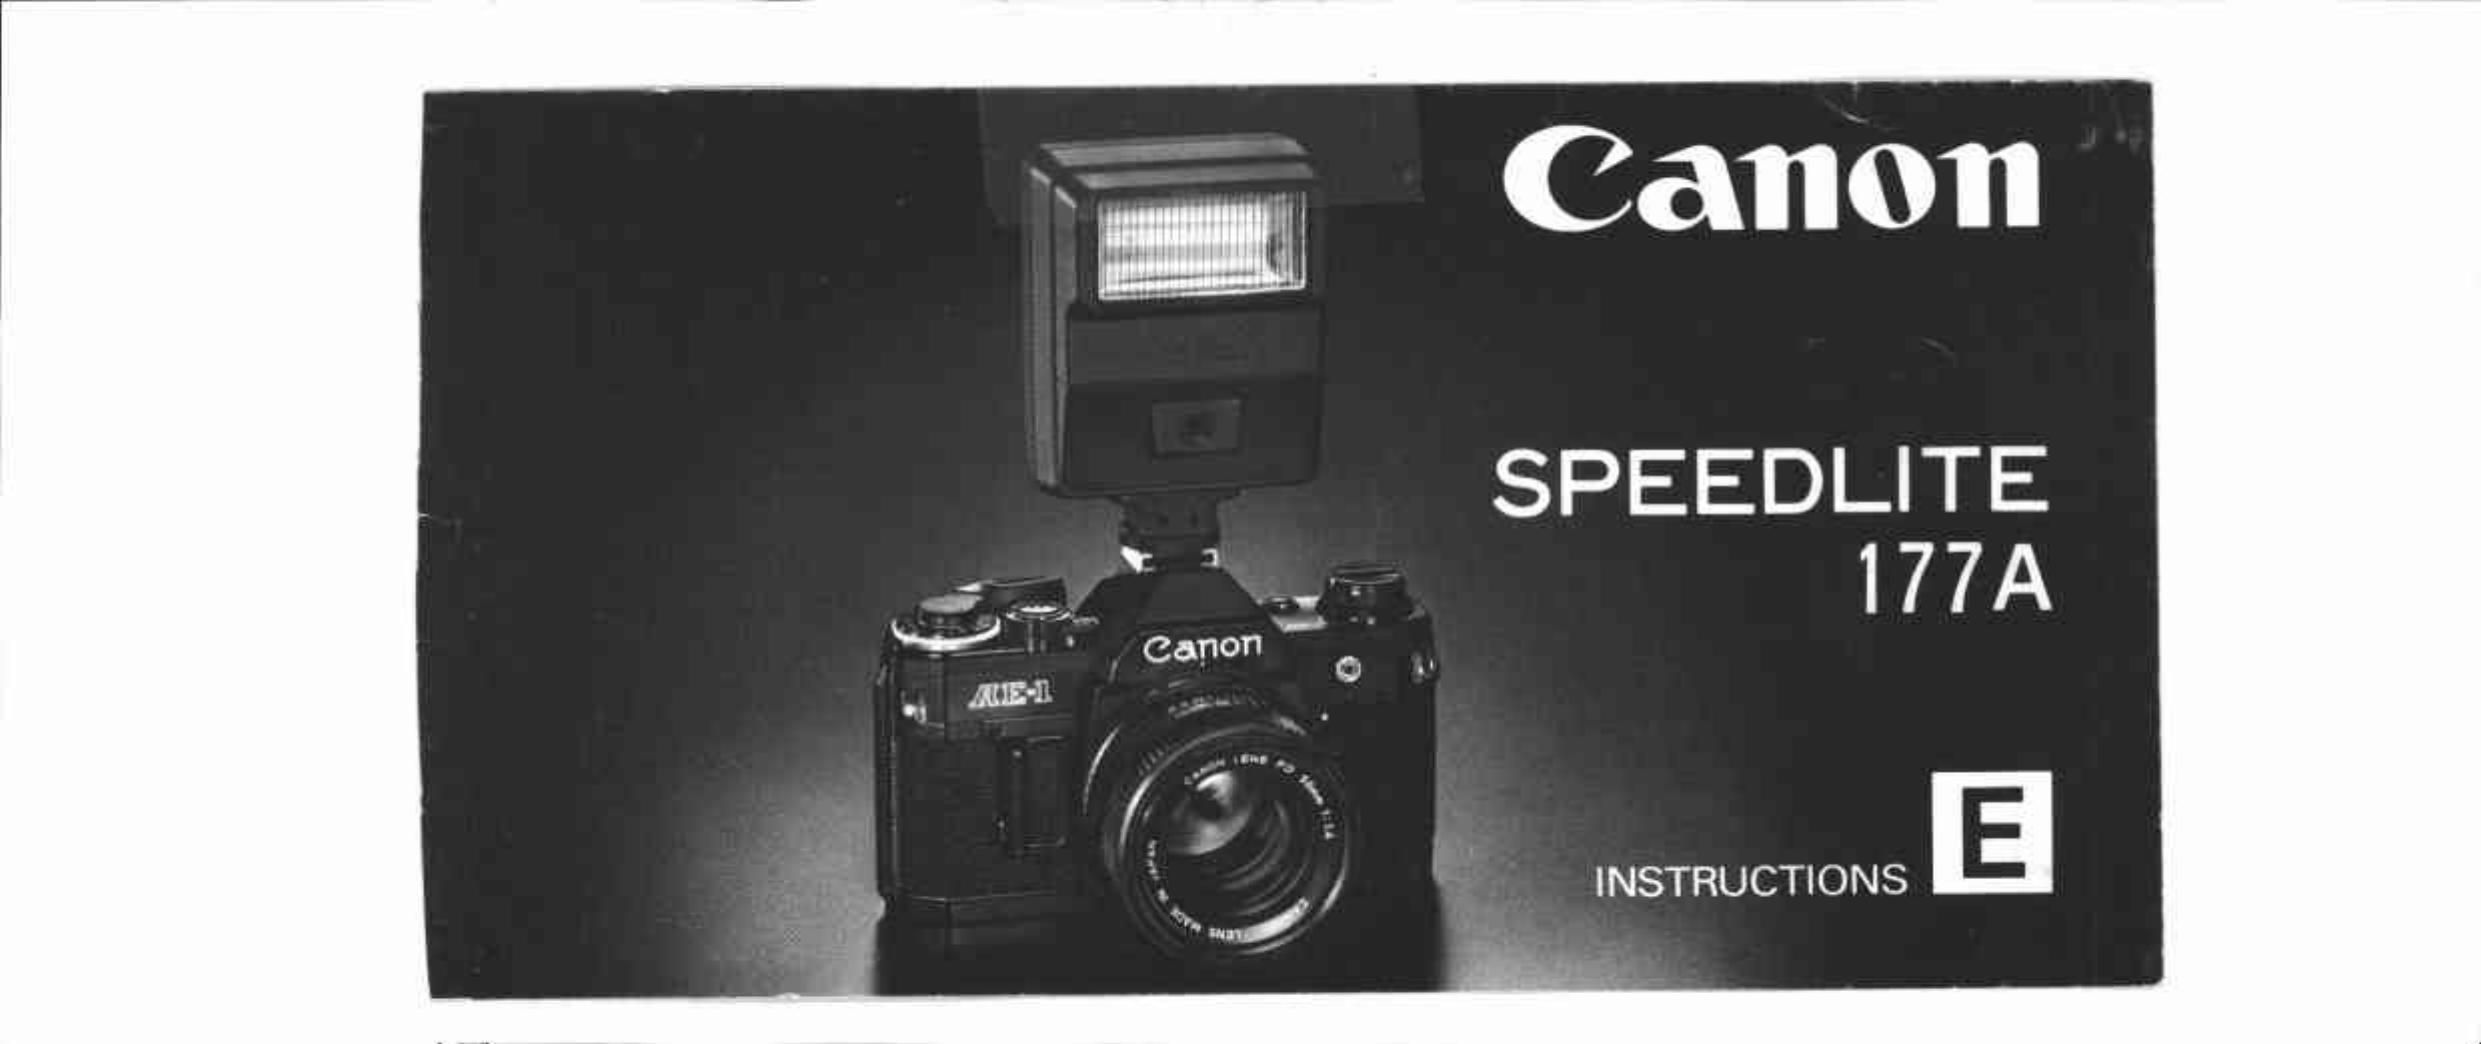 Canon 177 A Camera Flash User Manual